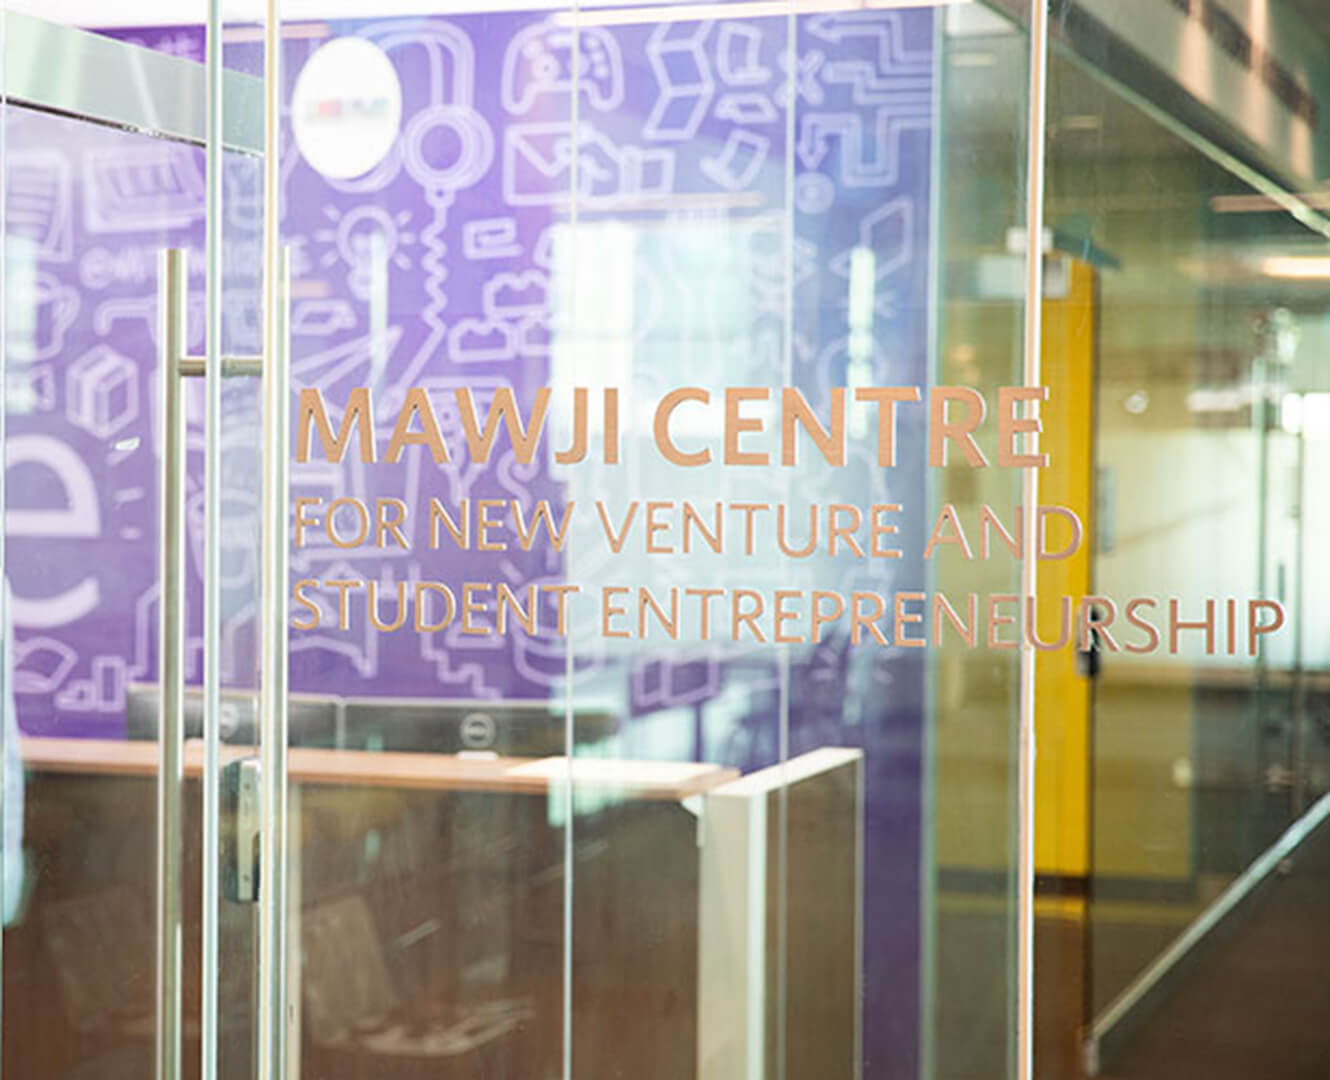 Mawji Centre: entrepreneur resources for NAIT students